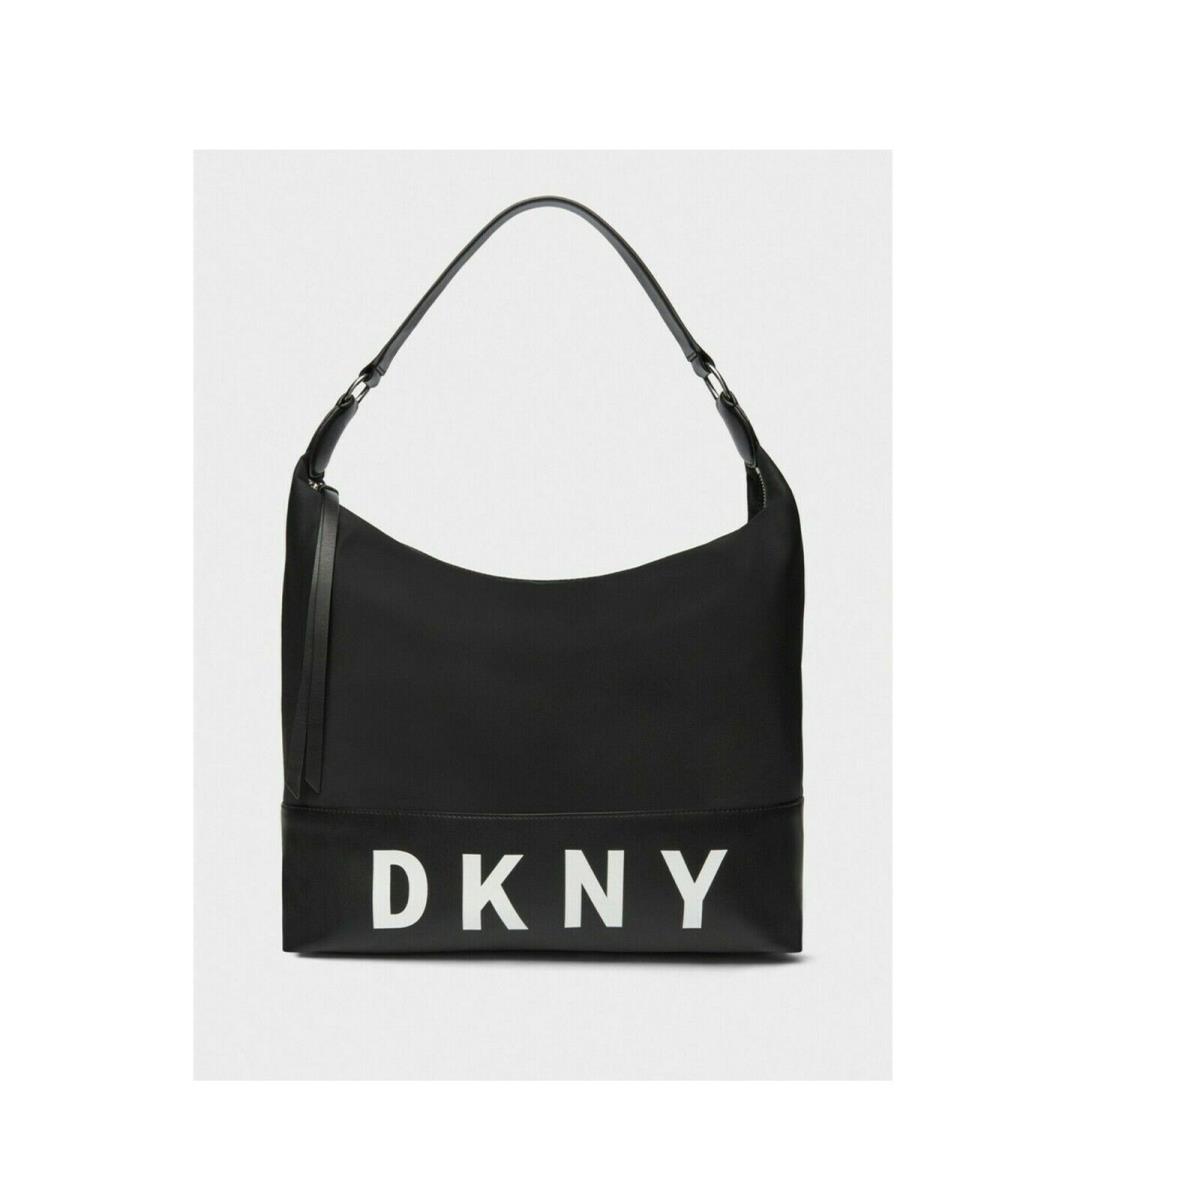 Dkny Women Black White Print Tanner Black Hobo with Zip Closure Tote Bag - Black Exterior